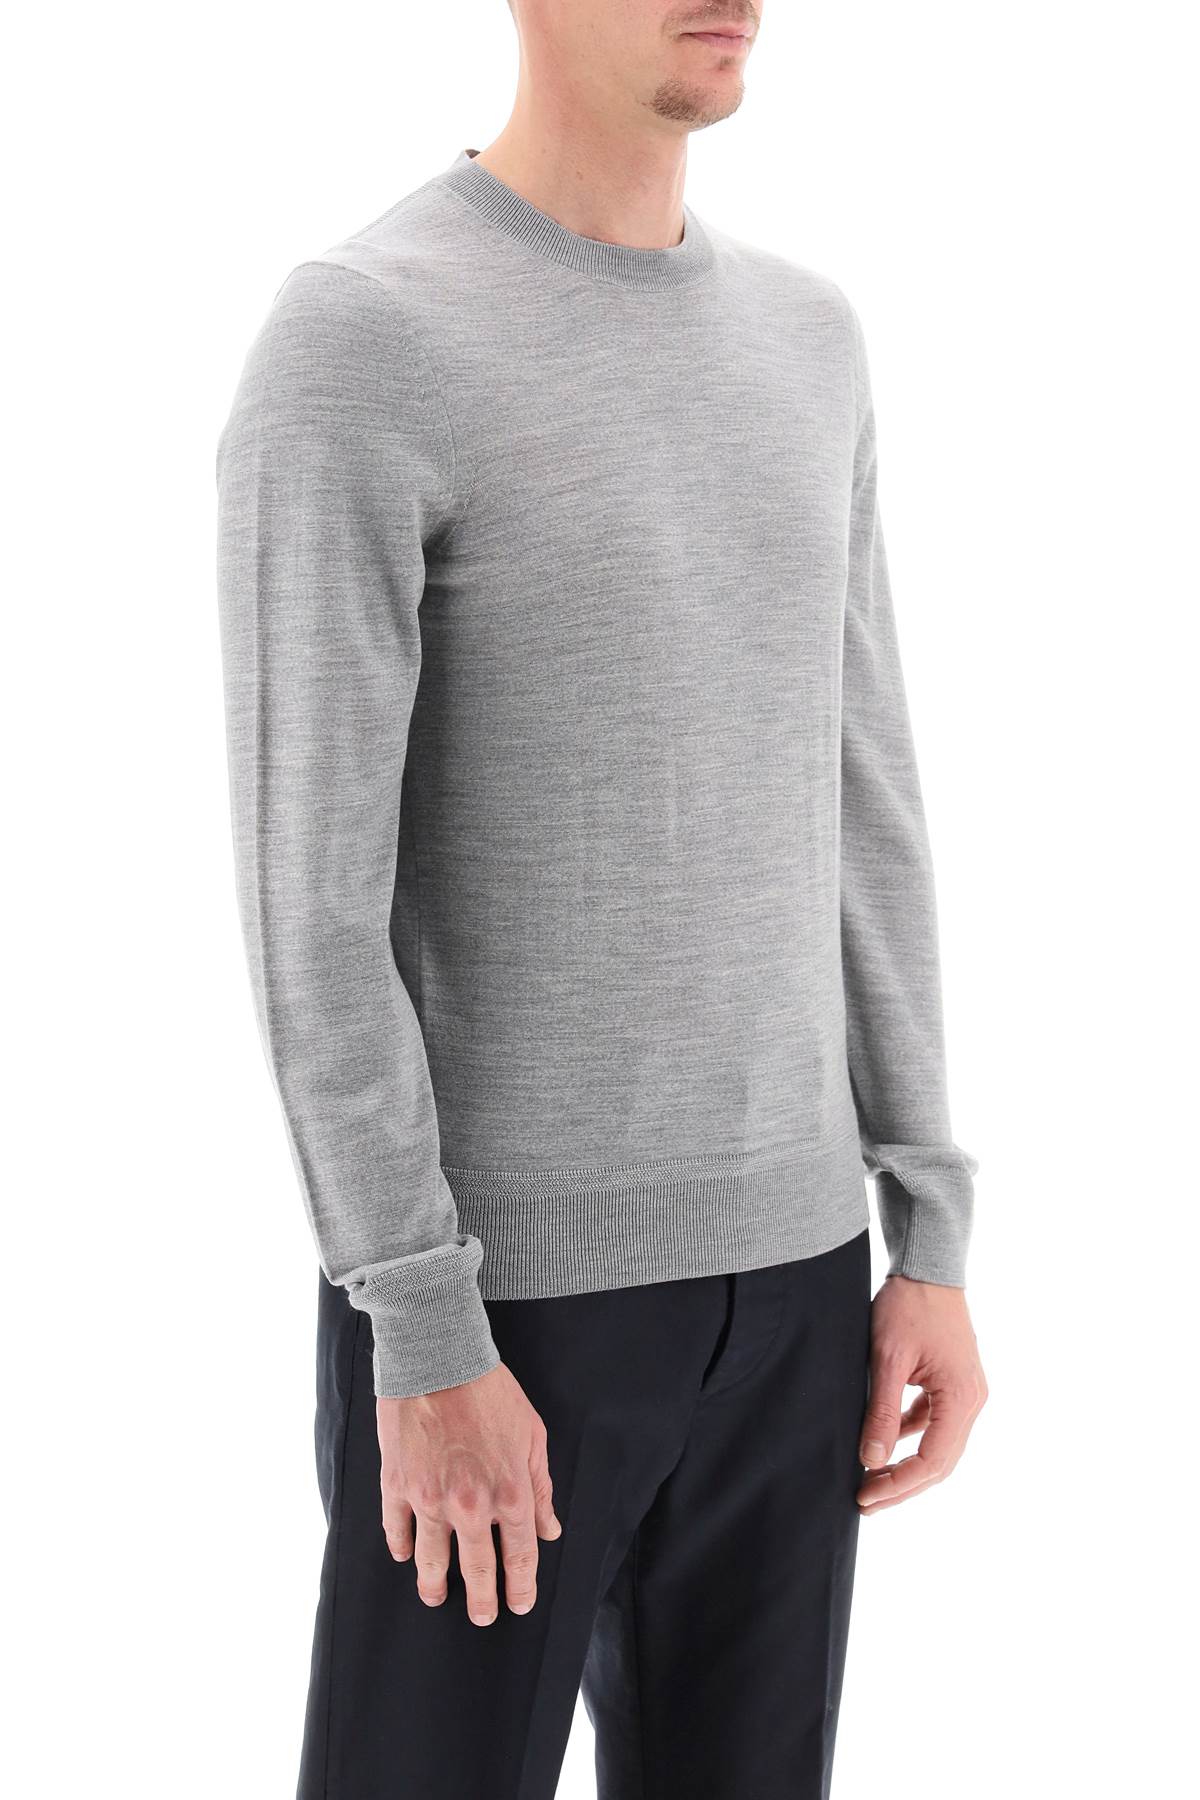 Tom ford light wool sweater-1